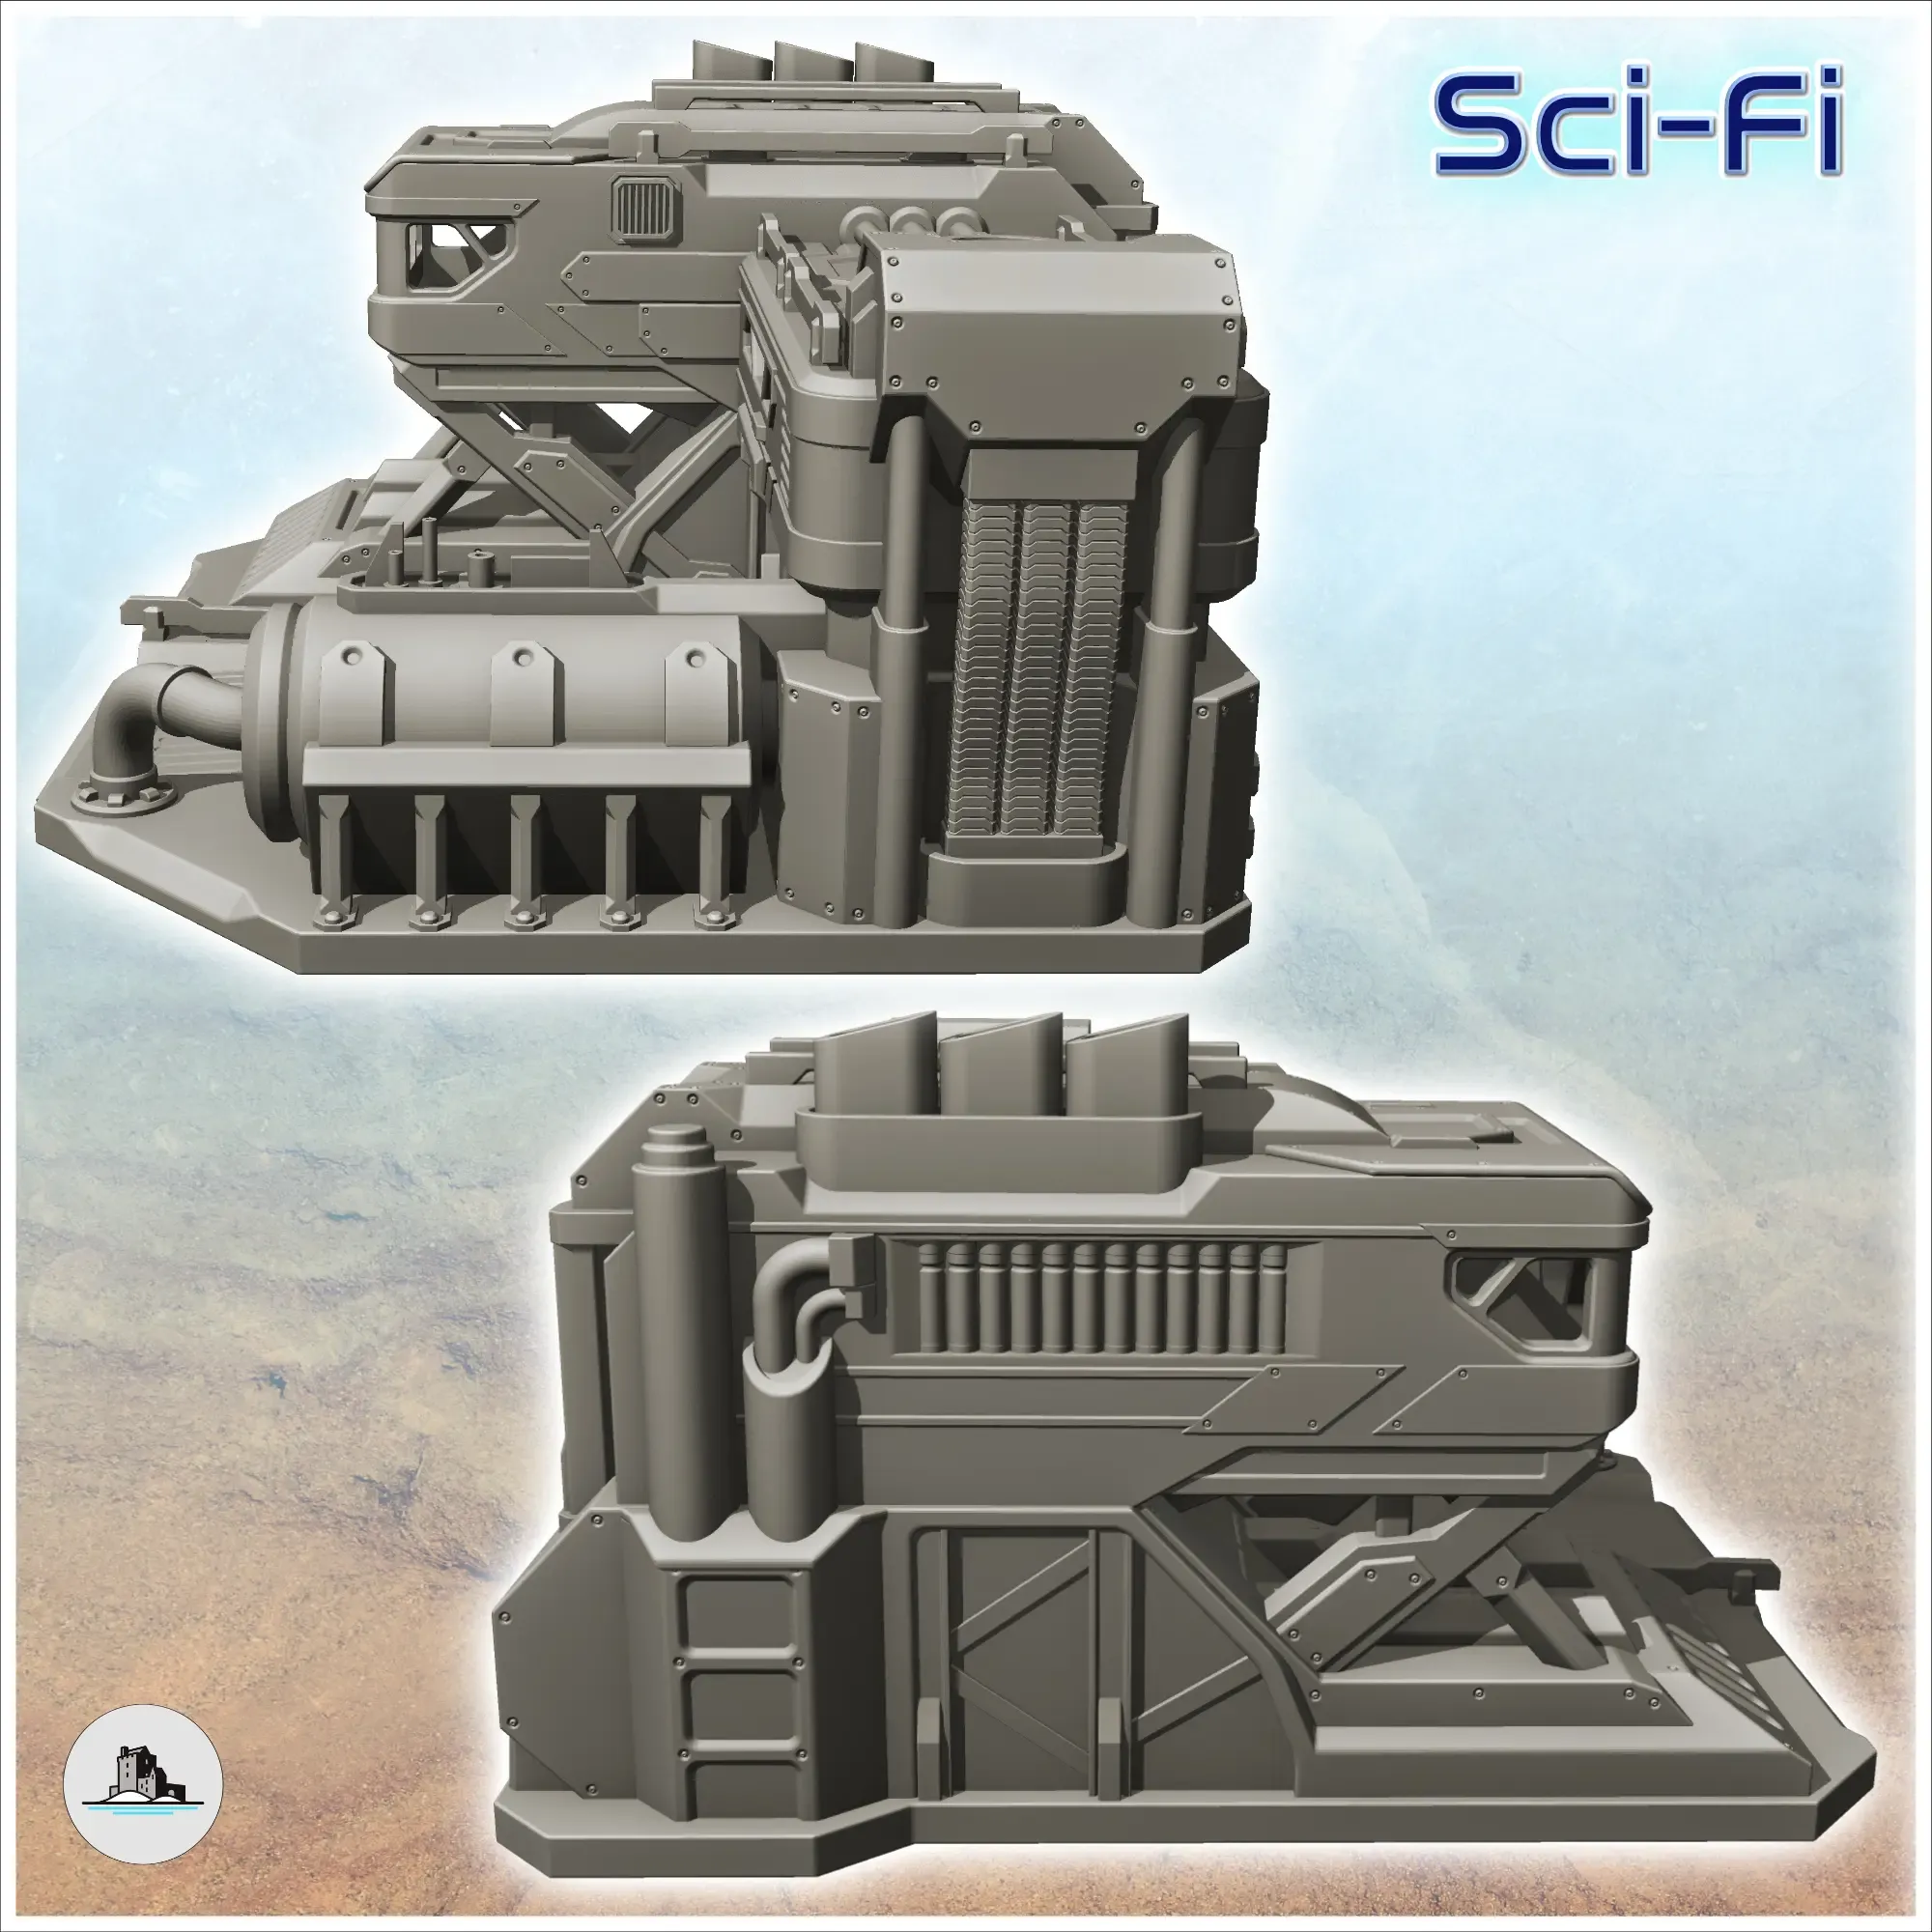 Sci-Fi headquarters & tank Terrain Scifi Science fiction SF